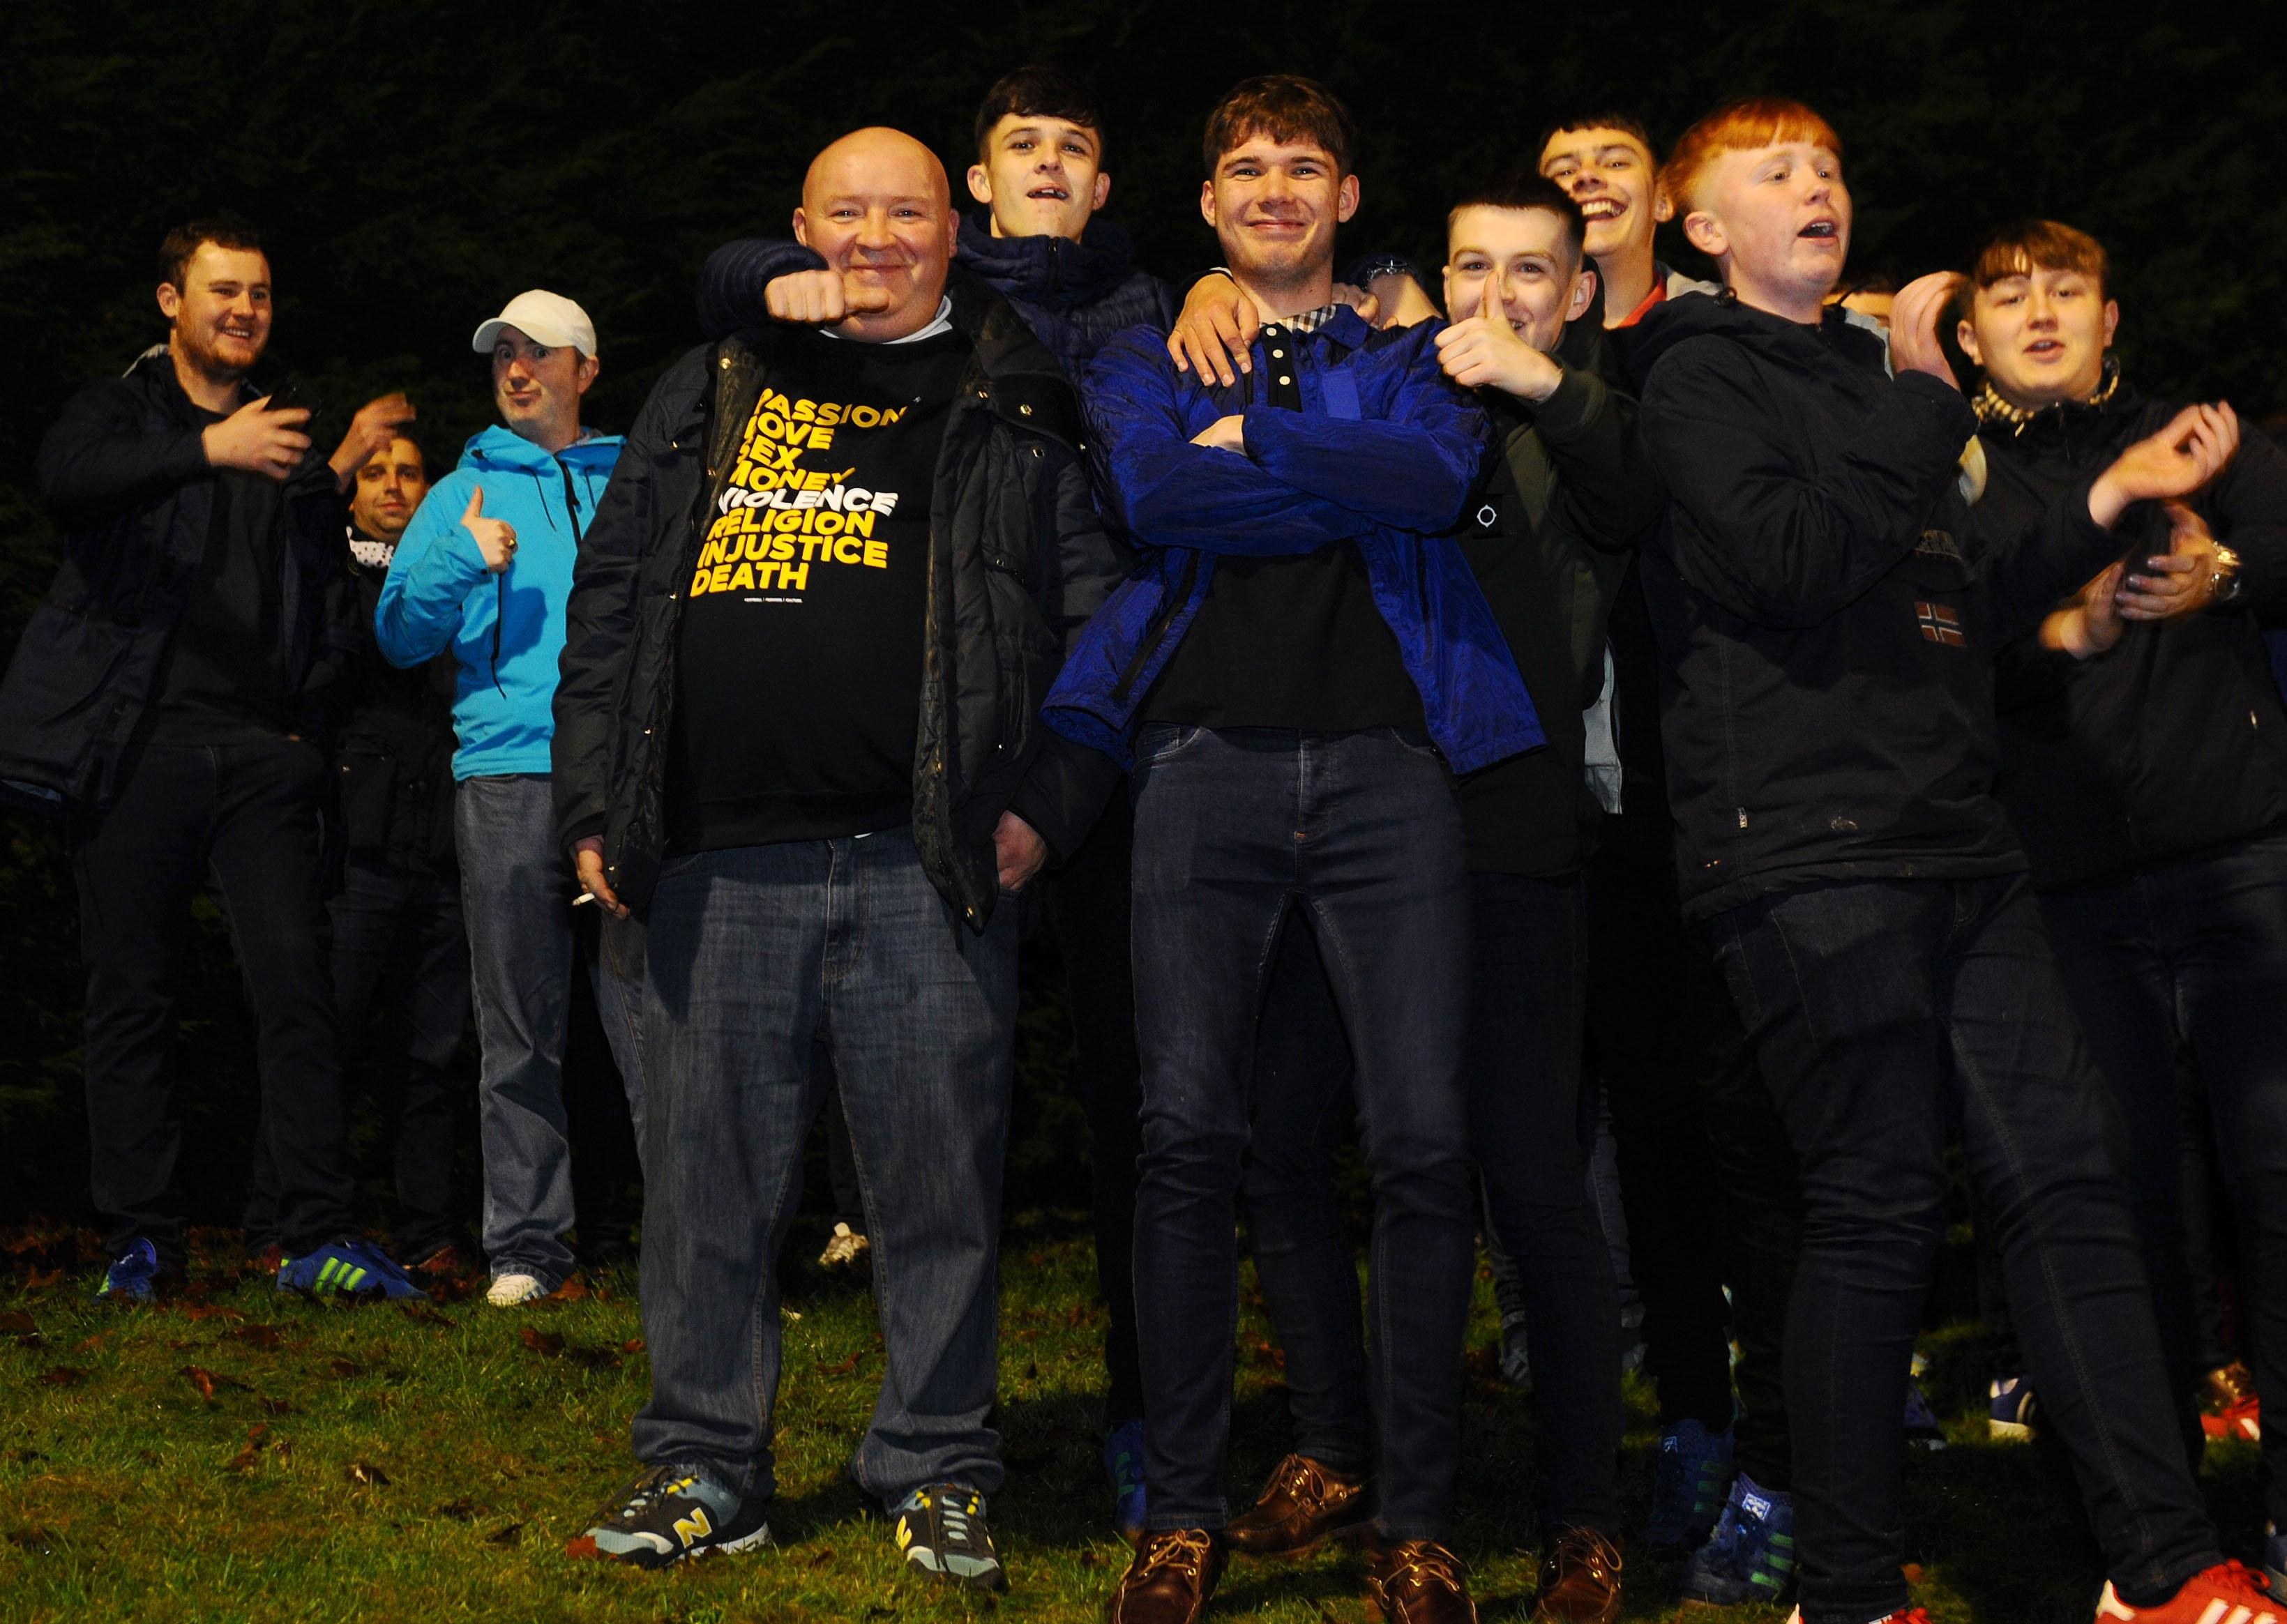 Linlithgow Rose v Falkirk FC. William Hill Scottish Cup third round. Falkirk fans.